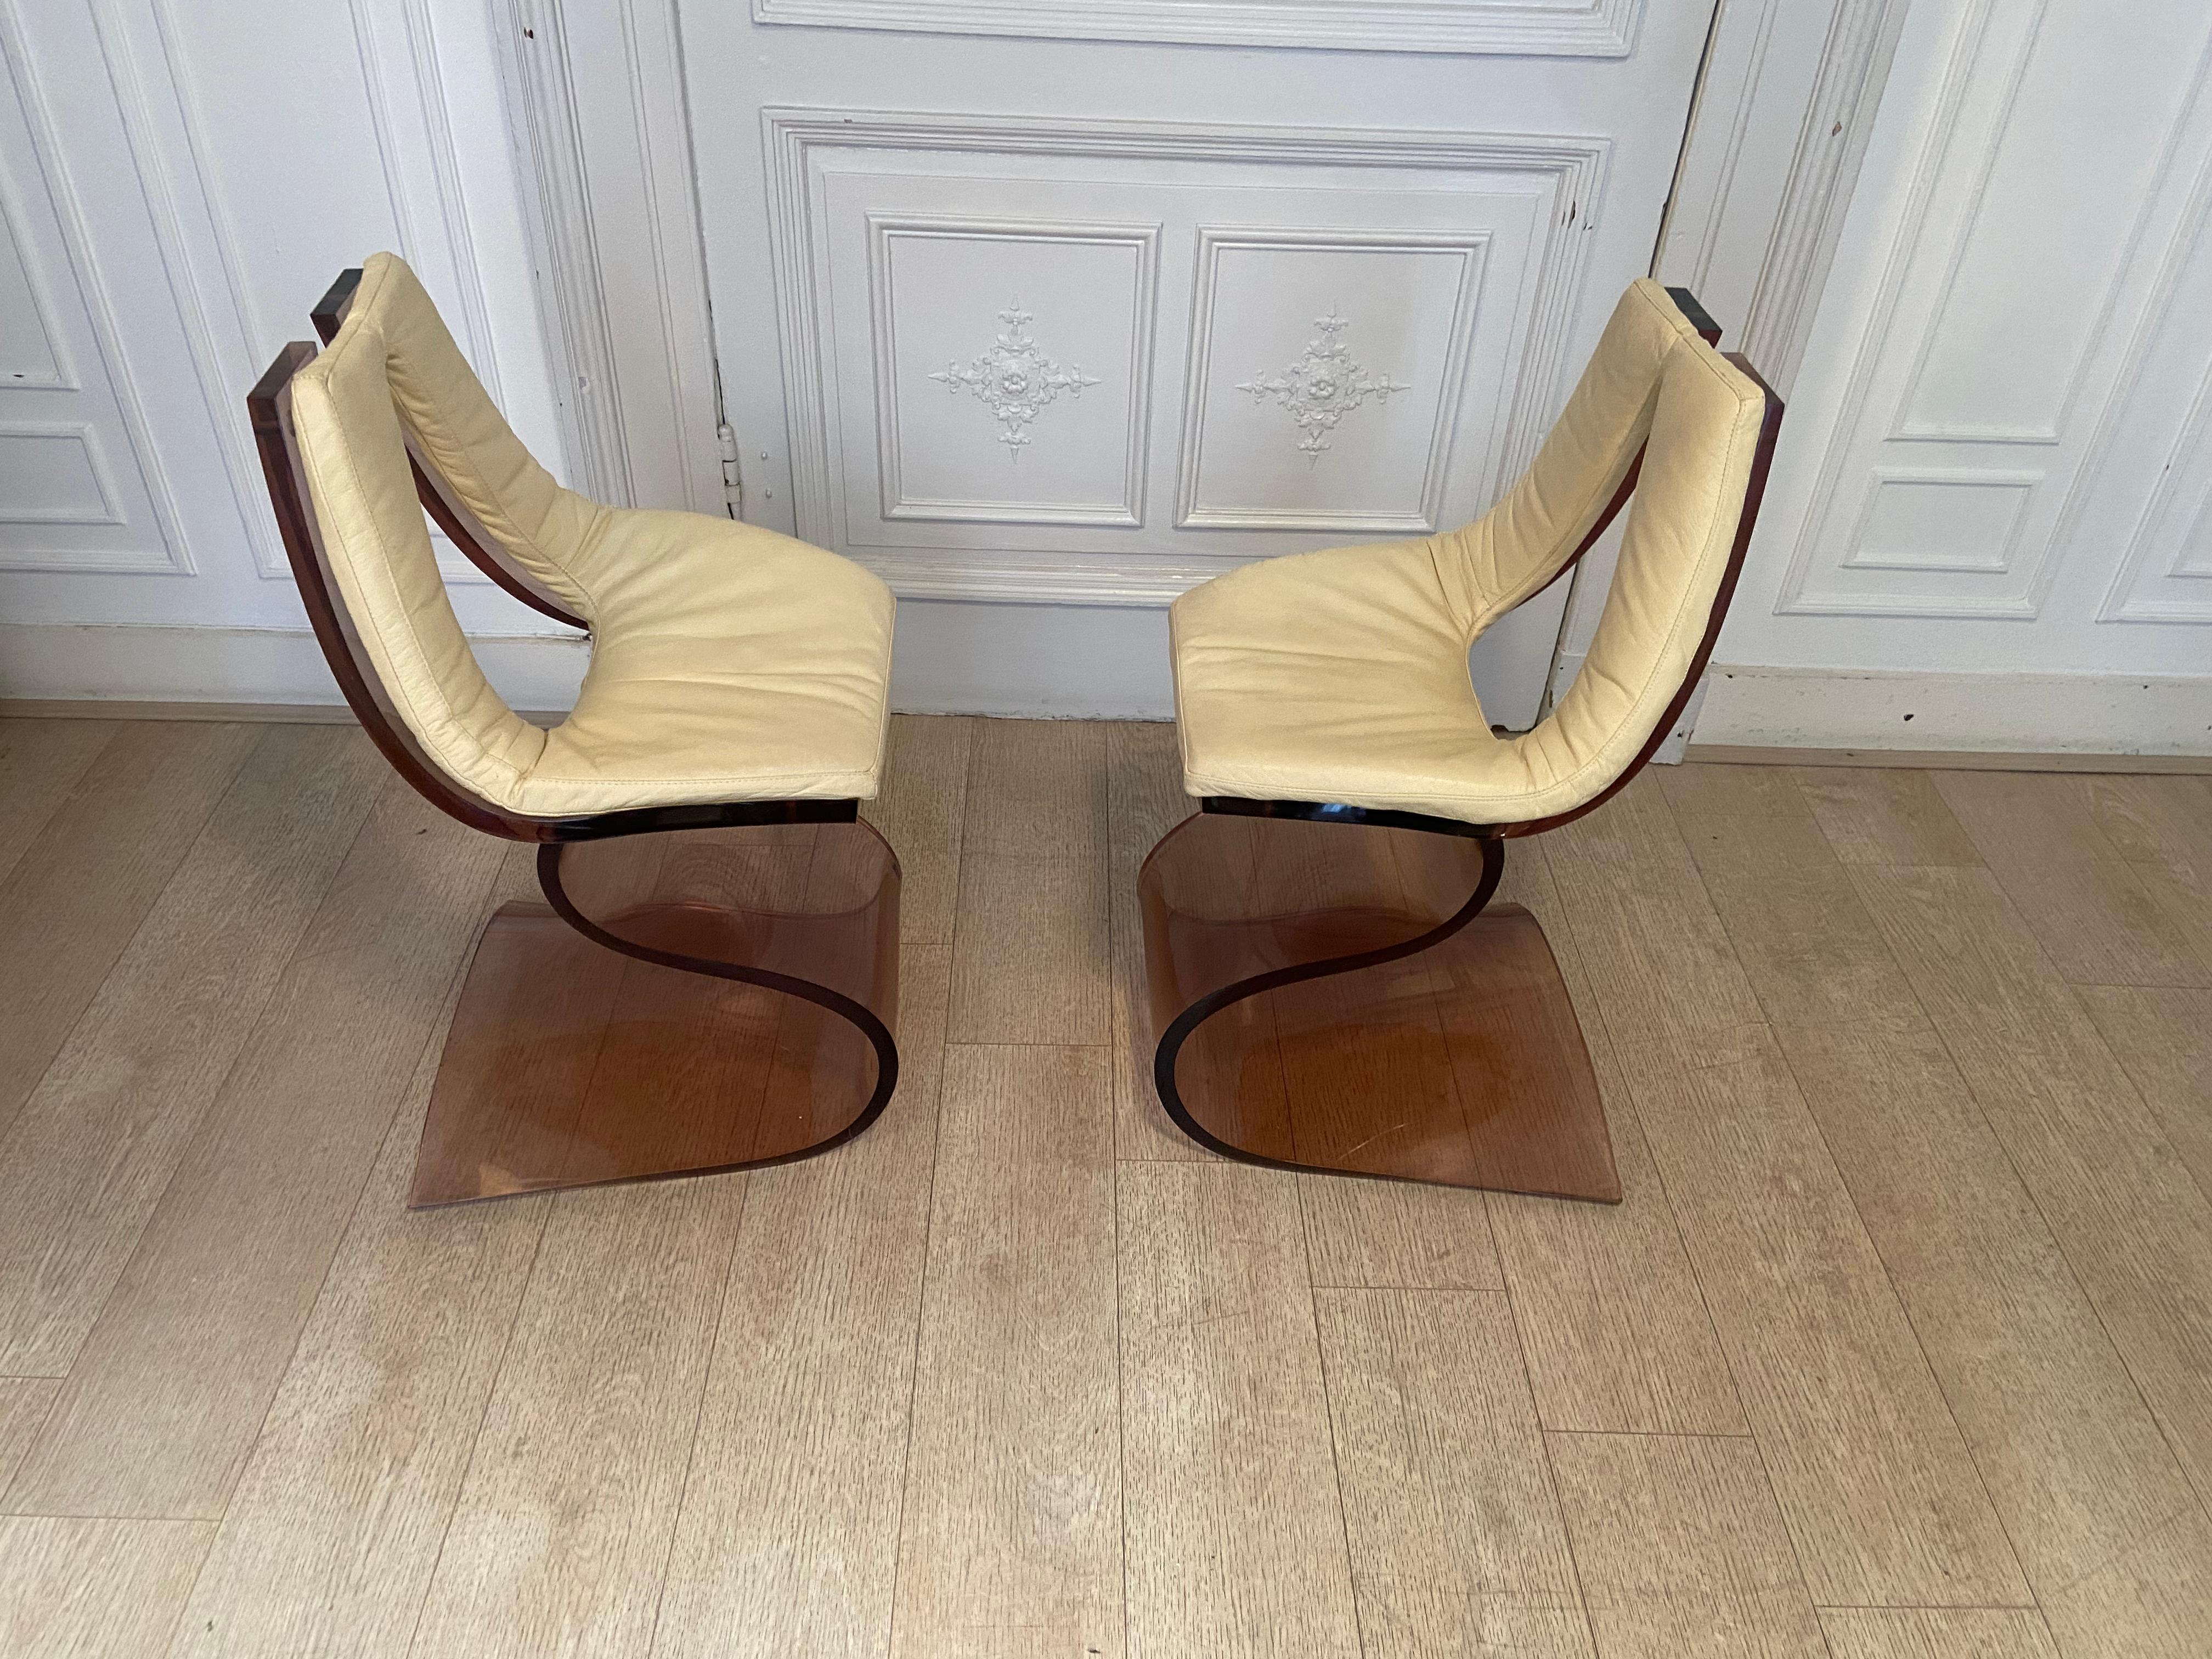 Michel Dumas Chairs, Plexiglass, 1970s For Sale 6